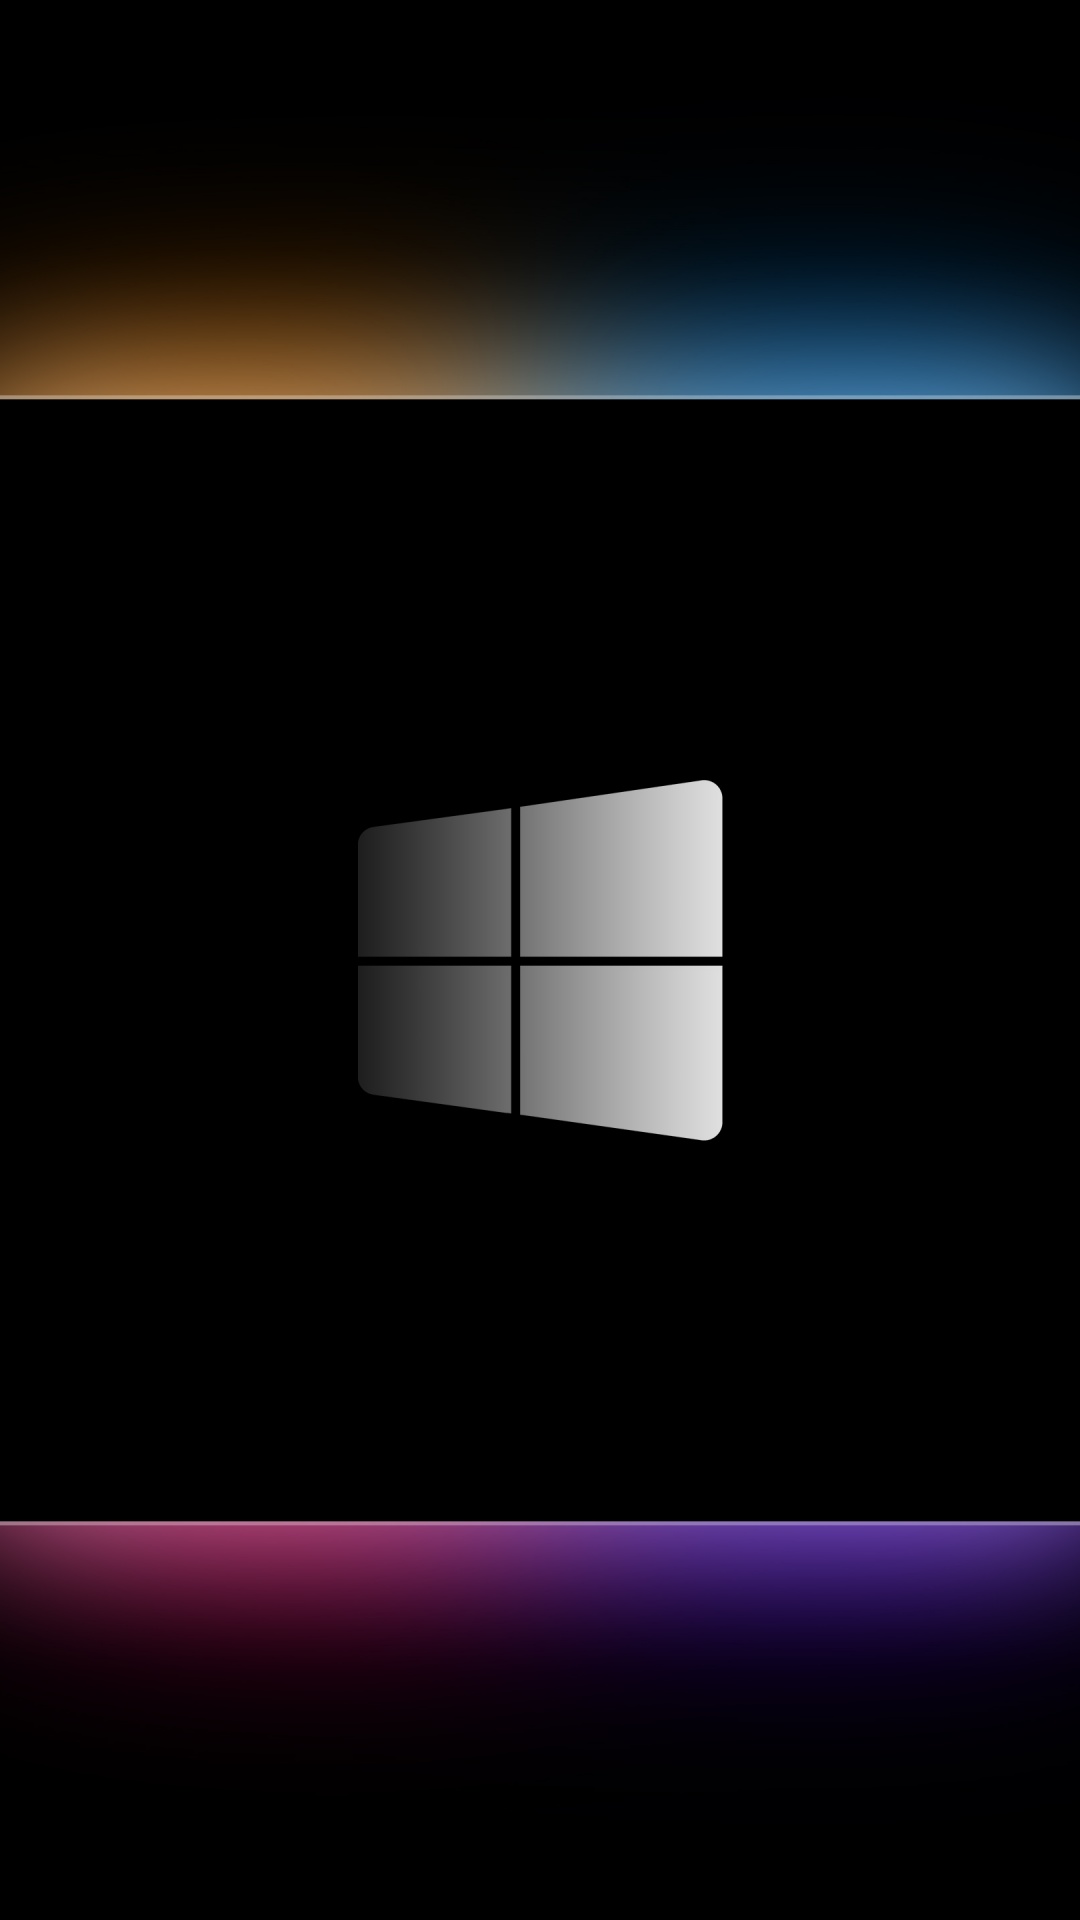 HD wallpaper: Windows 10, abstract, GMUNK, copy space, dark, indoors, black  color | Wallpaper Flare